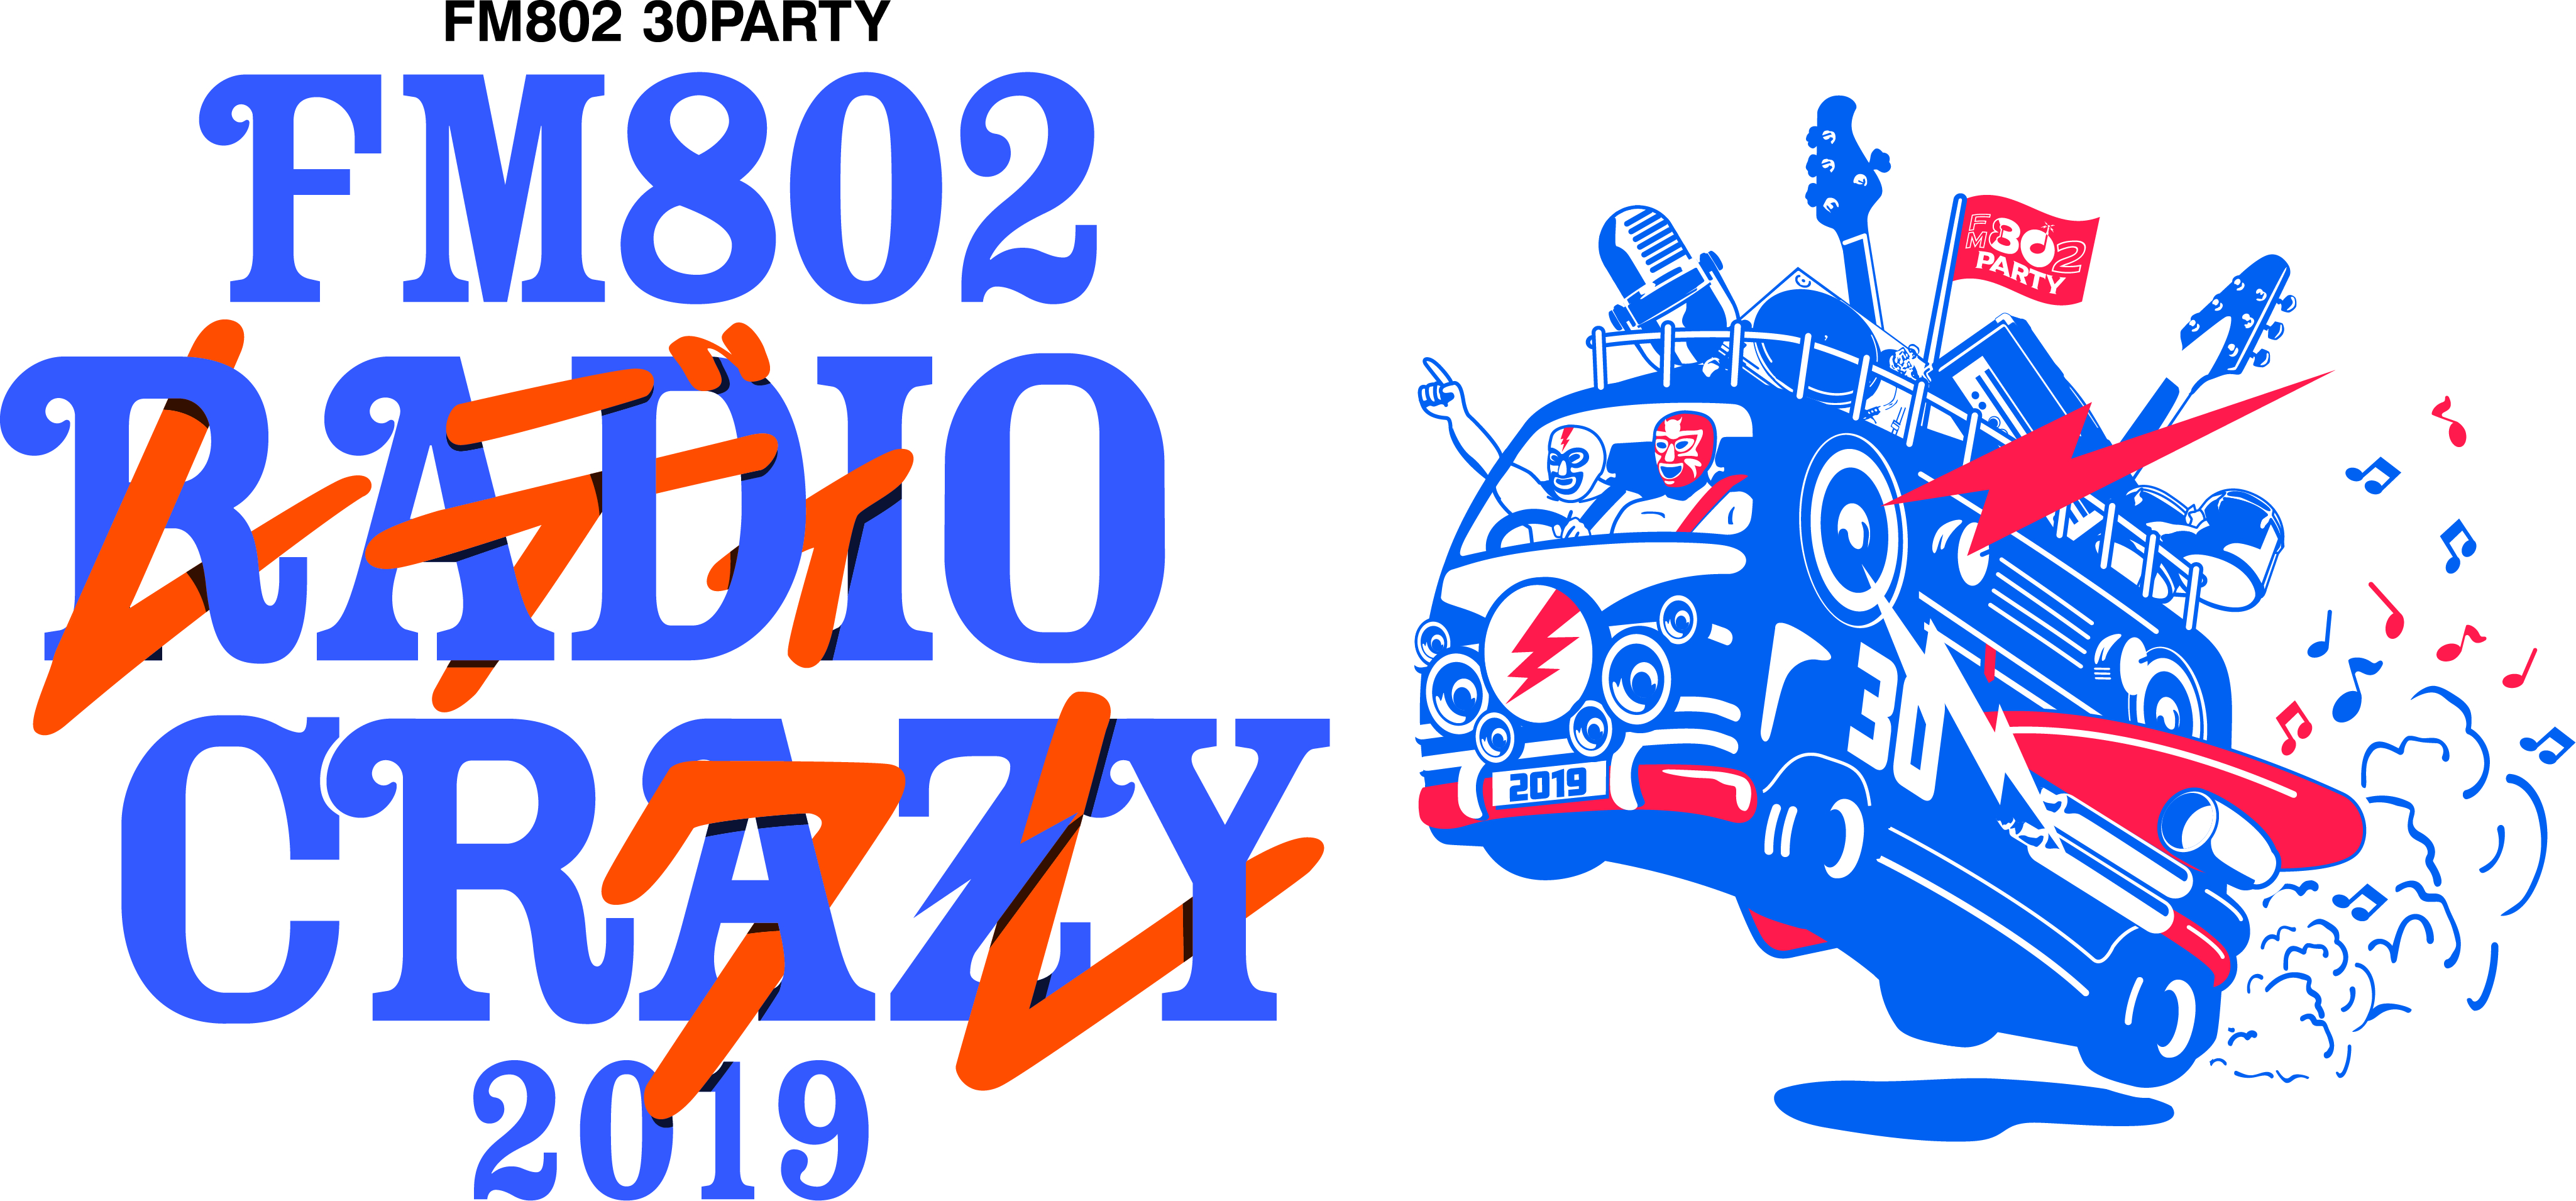 Live情報 Fm802 30party Fm802 Rock Festival Radio Crazy 19 出演決定 フラワーカンパニーズ Official Website